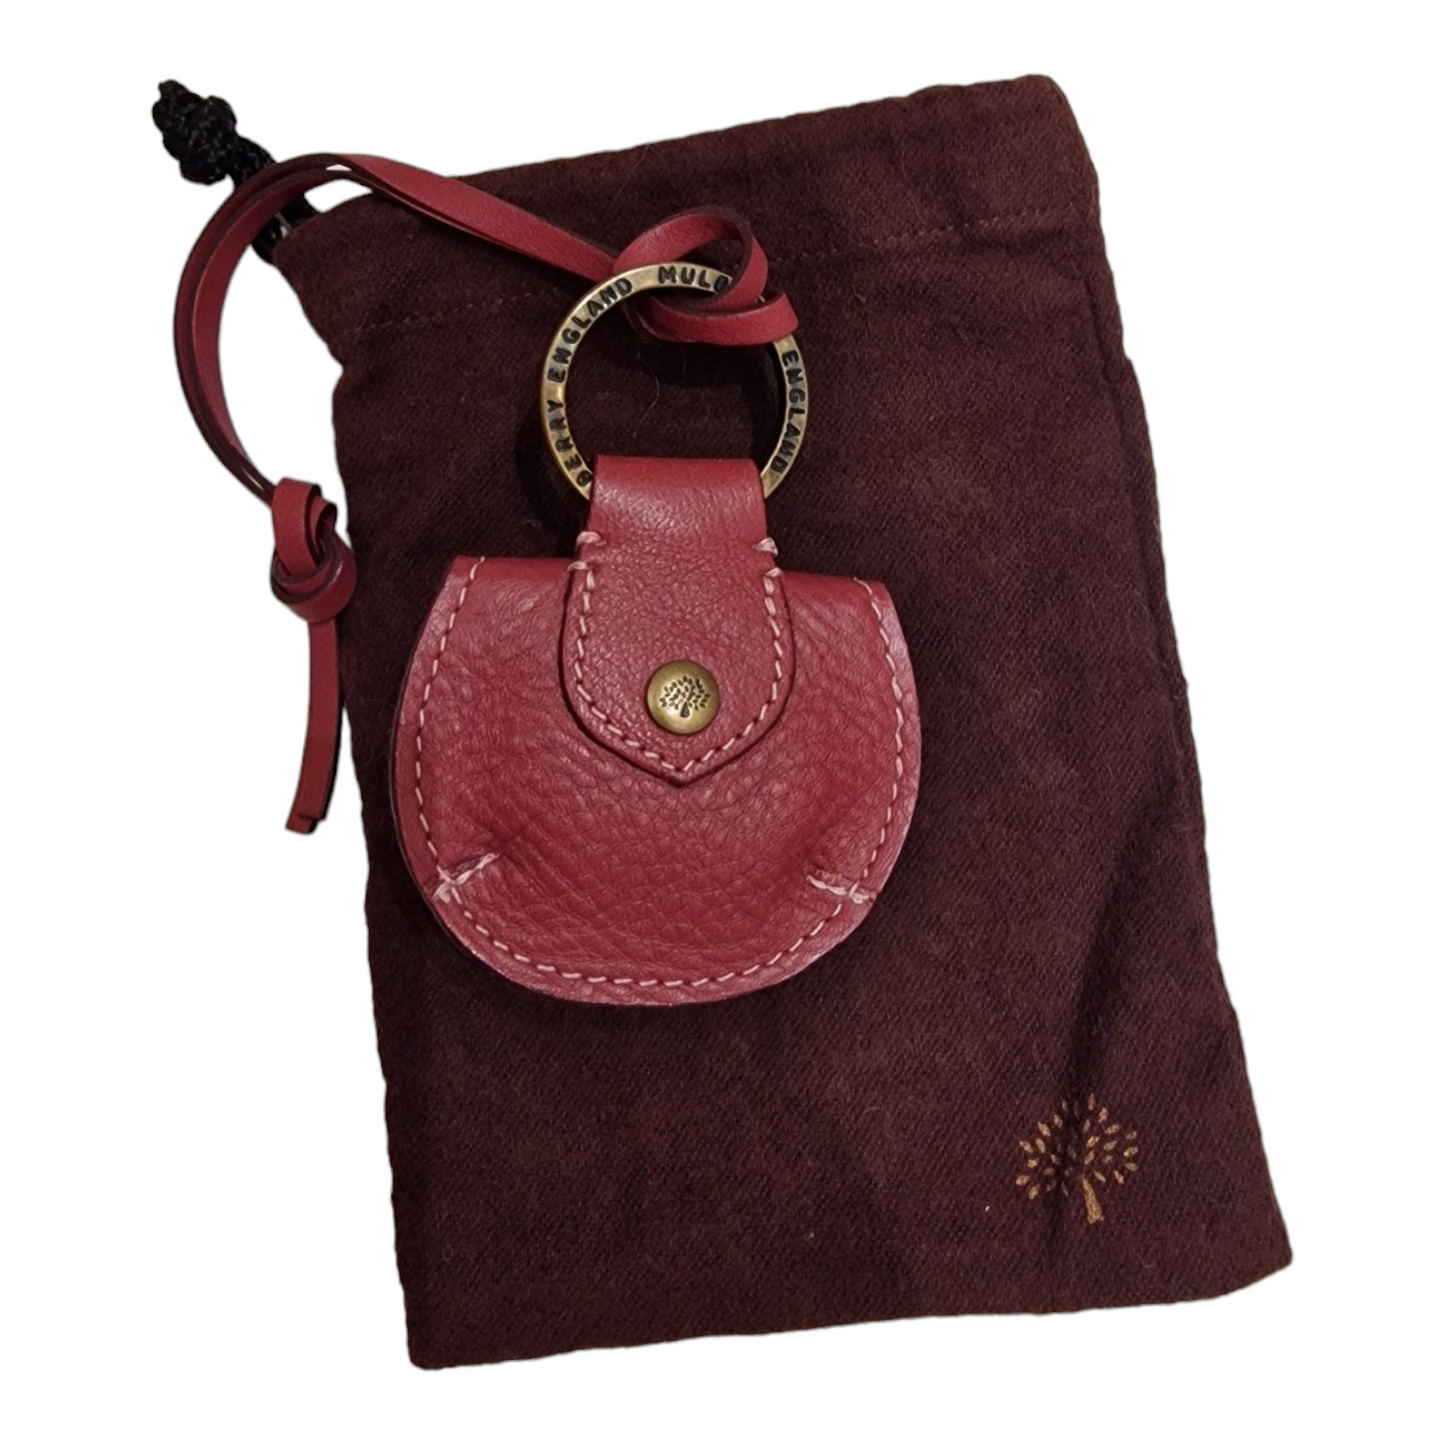 Mulberry Handbag charm/keyring, Rose